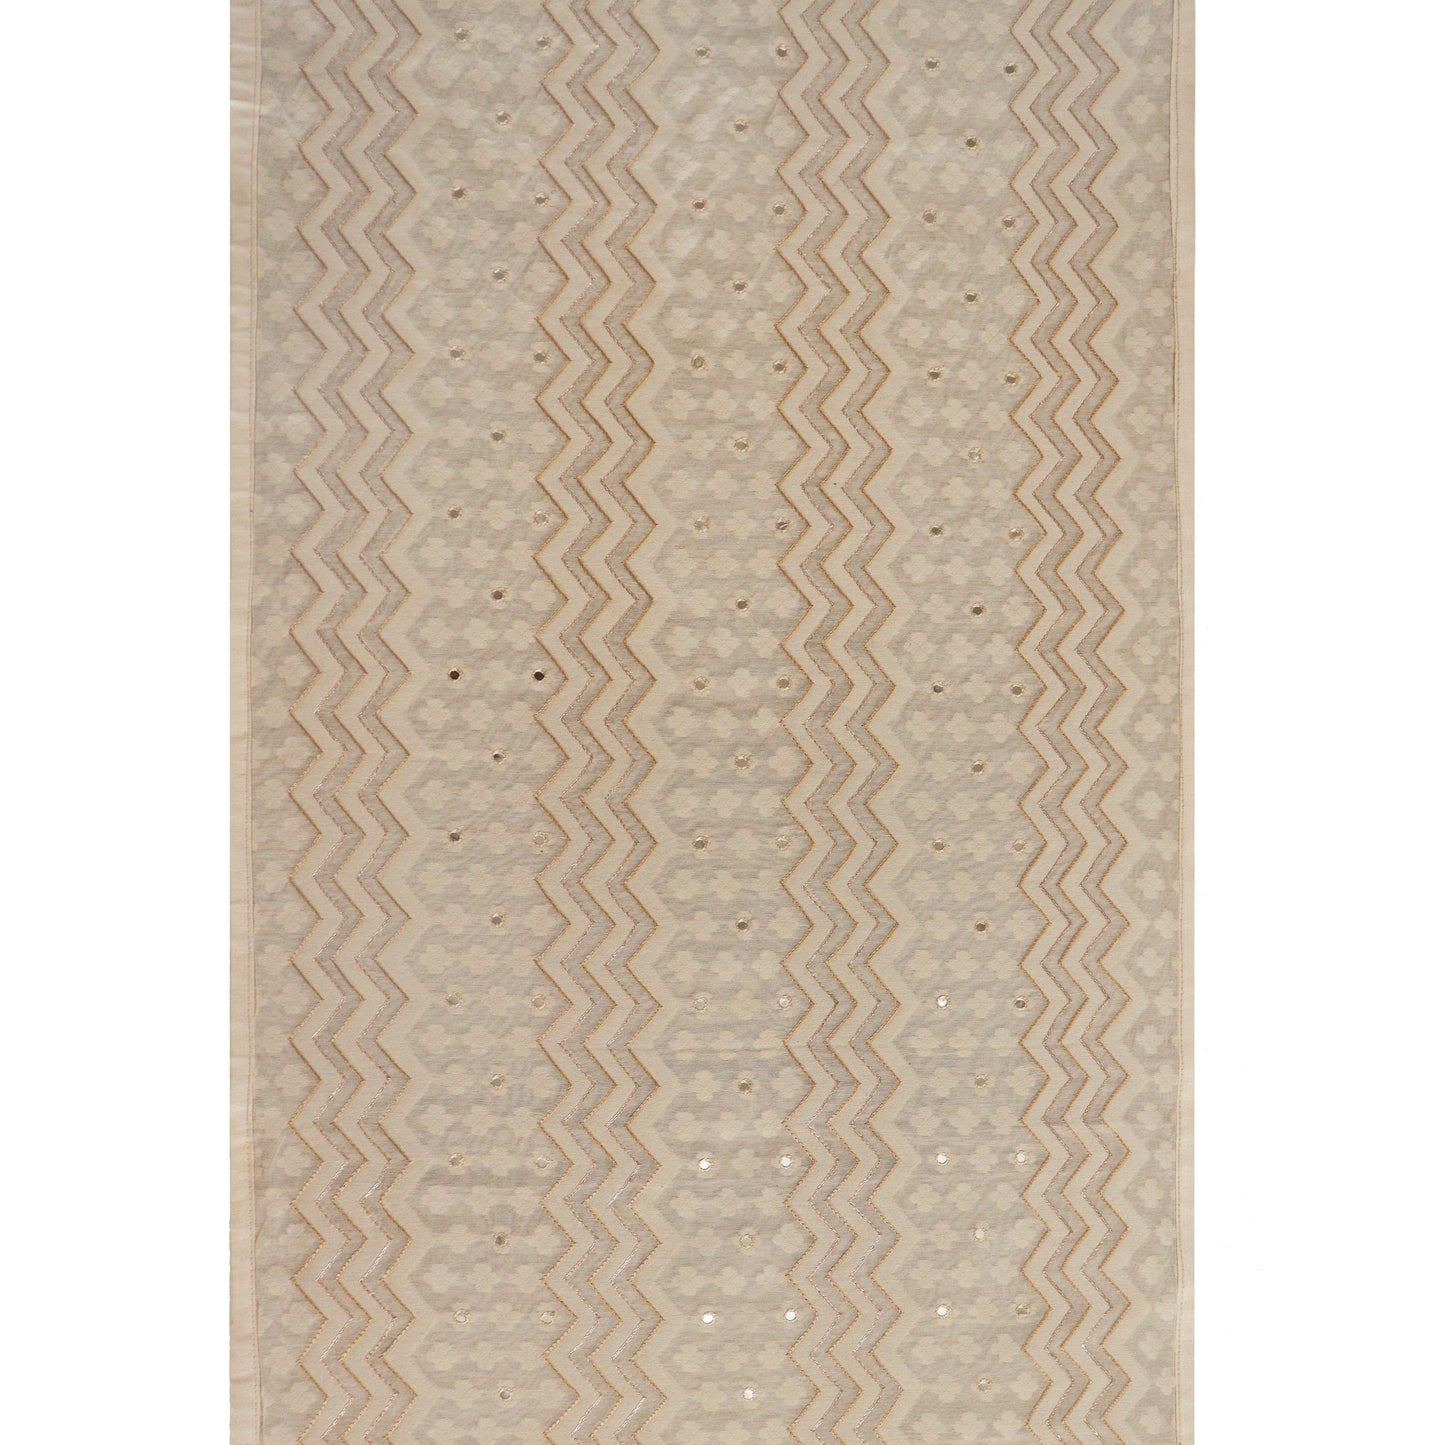 Banarsi weave Embroidered Table Runner